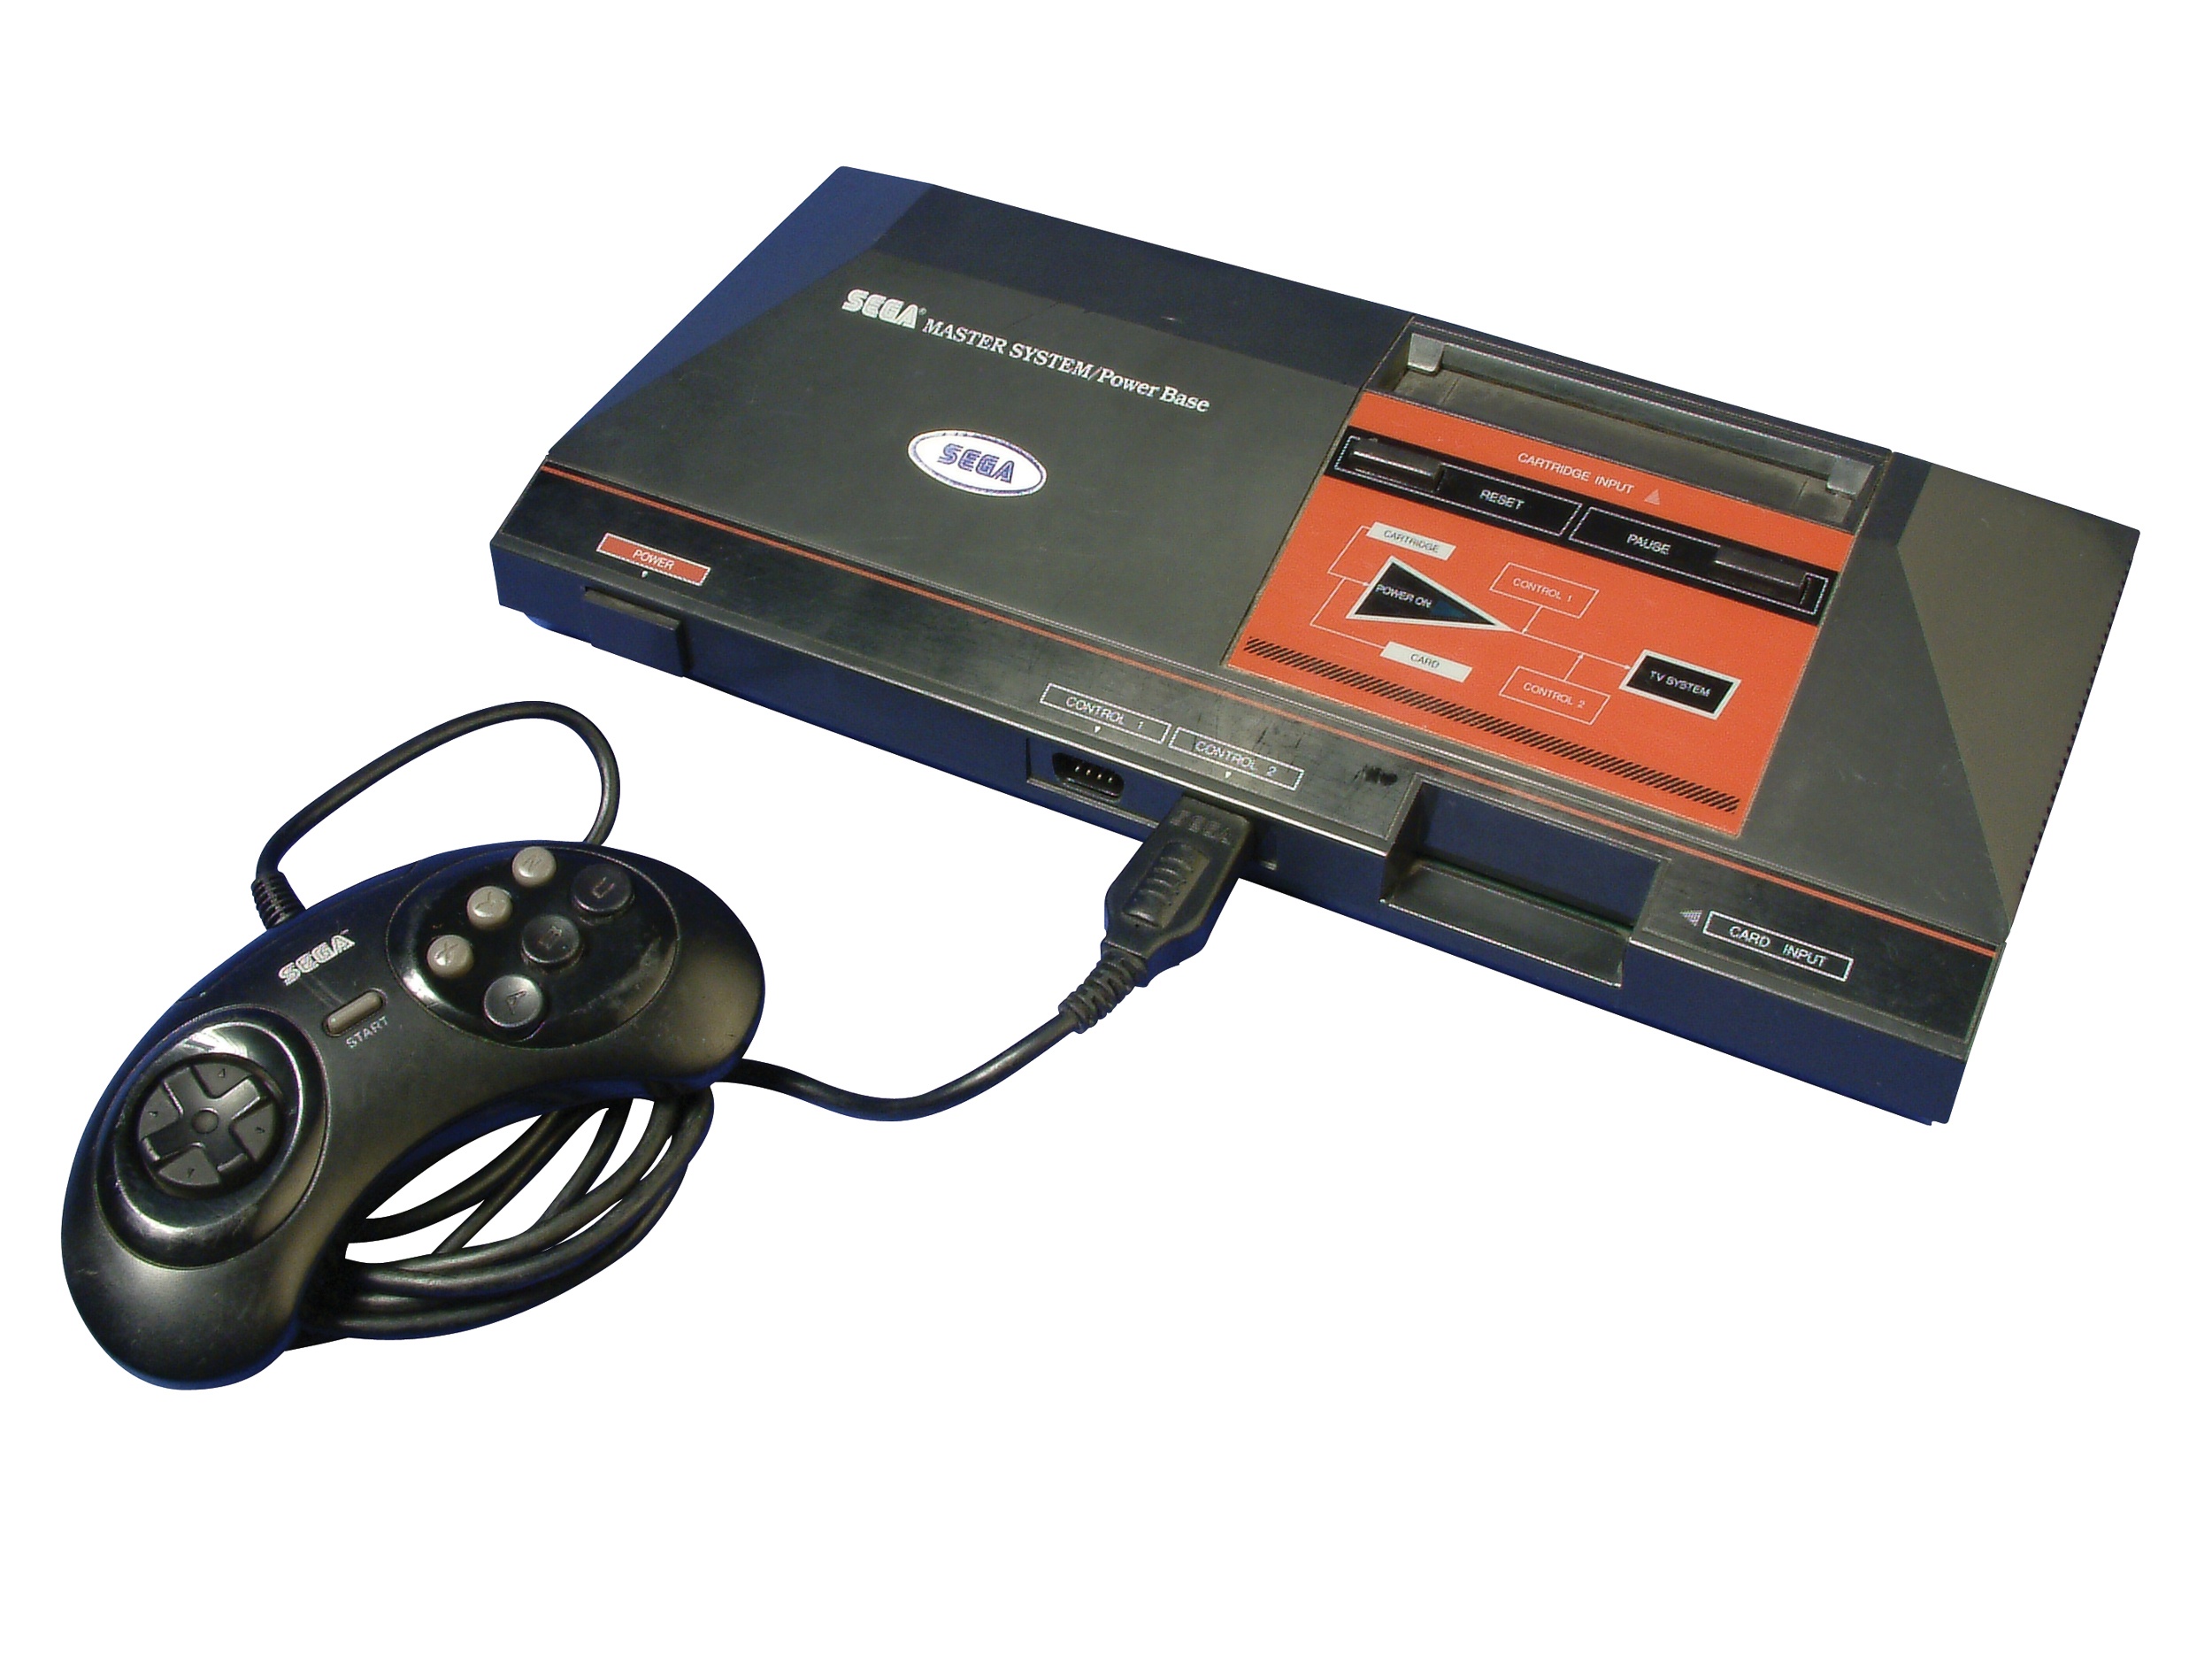 Sega Mark III / Master System (Computerspielemuseum Berlin CC BY-SA)